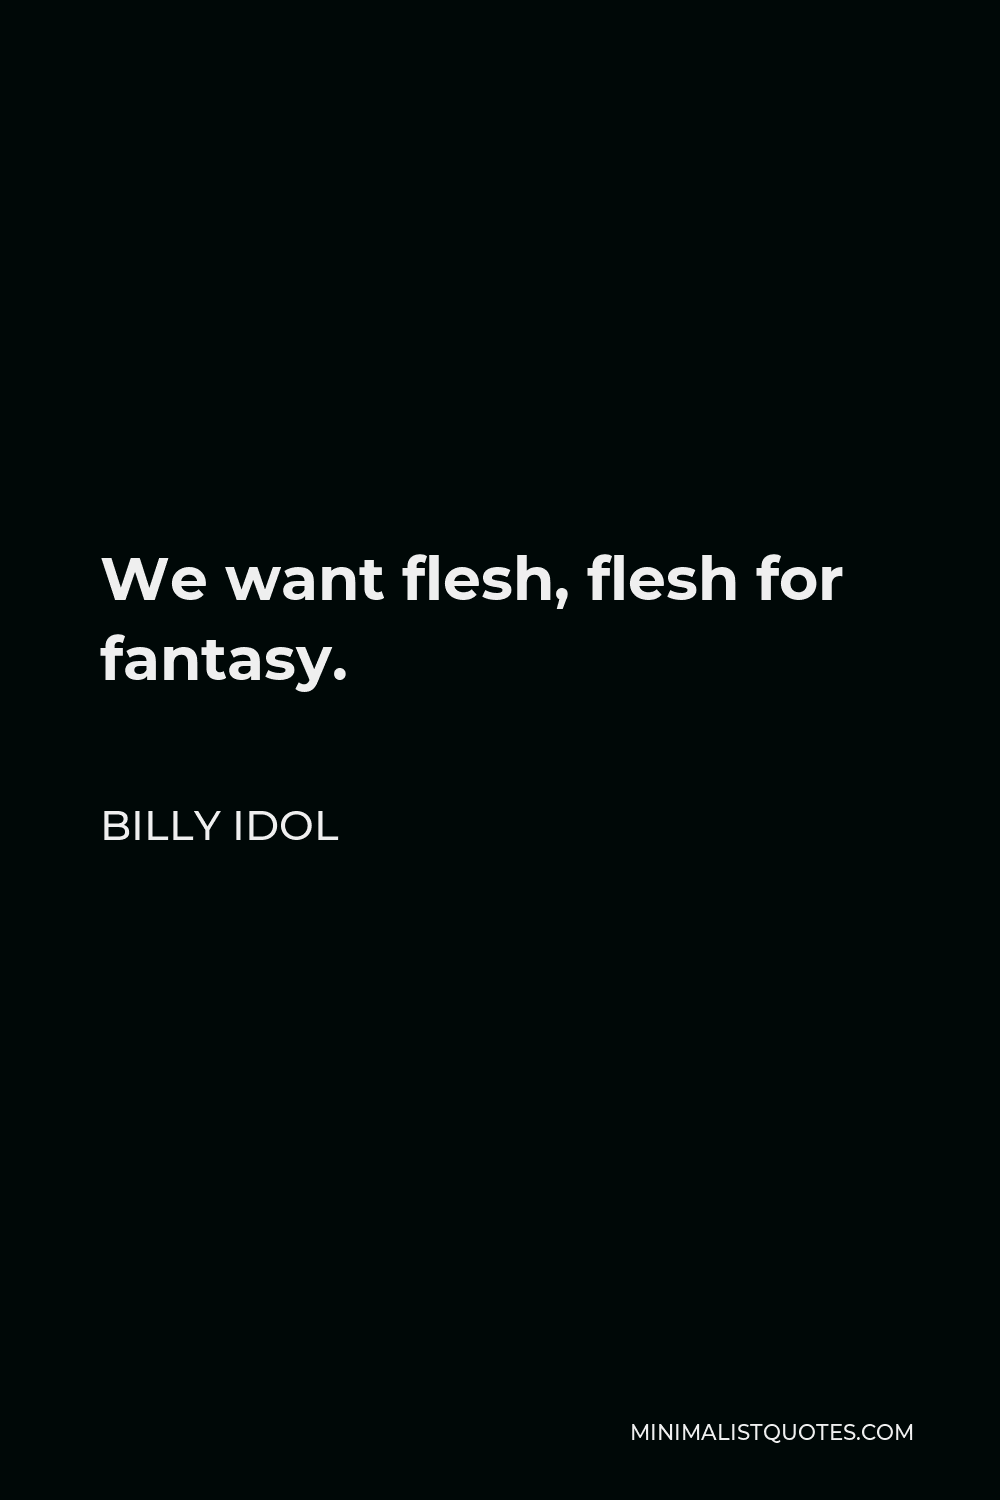 Billy Idol Quote - We want flesh, flesh for fantasy.